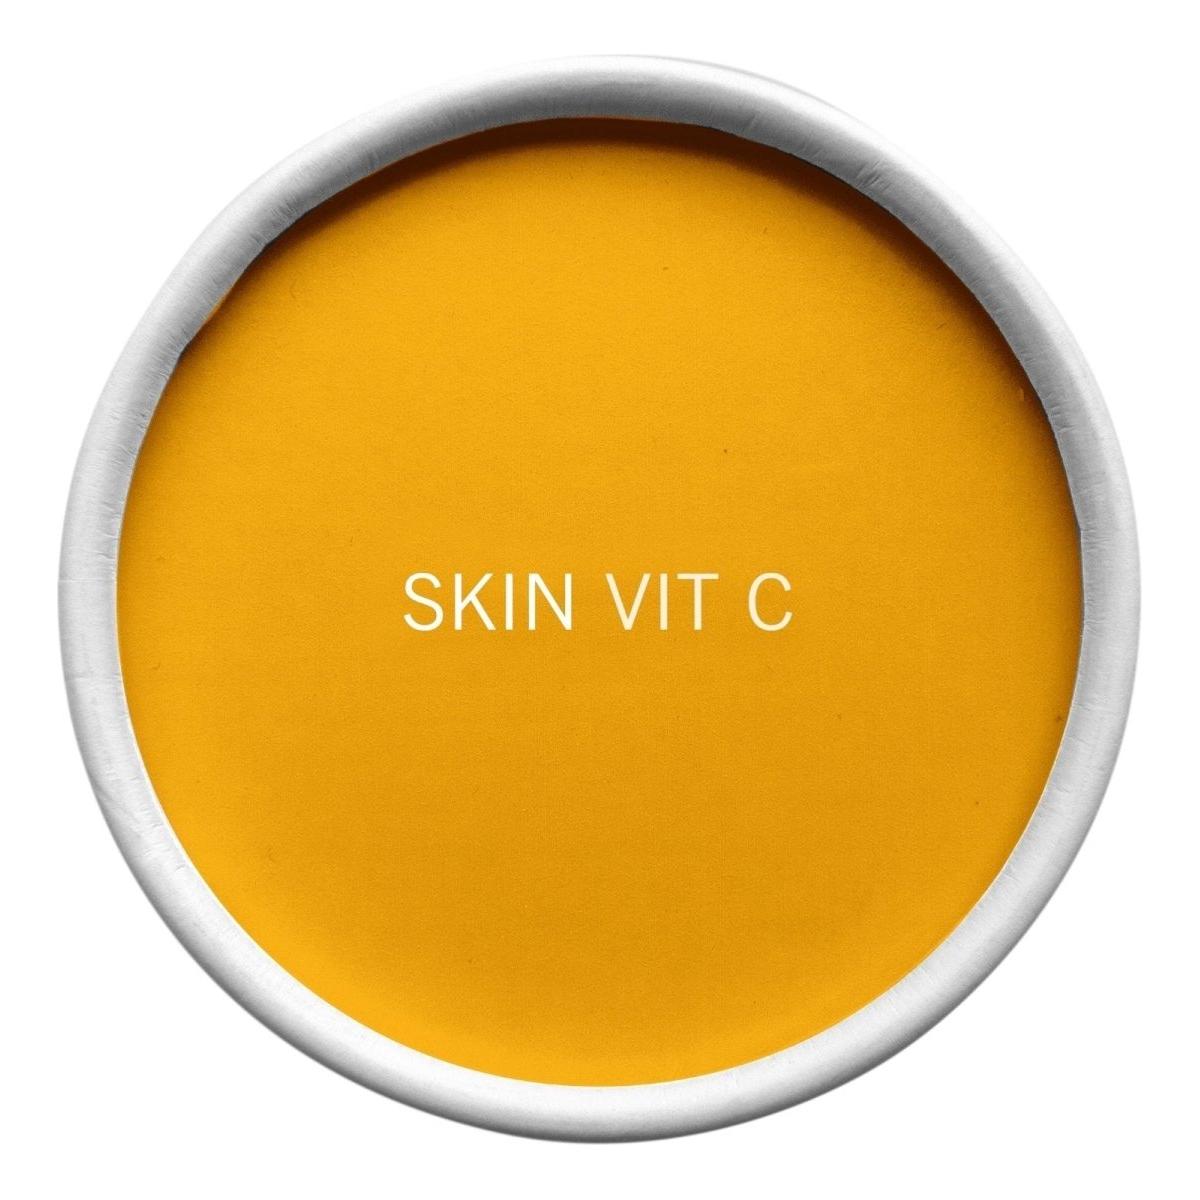 Advanced Nutrition Programme | Skin Vit C | 60 caps - DG International Ventures Limited